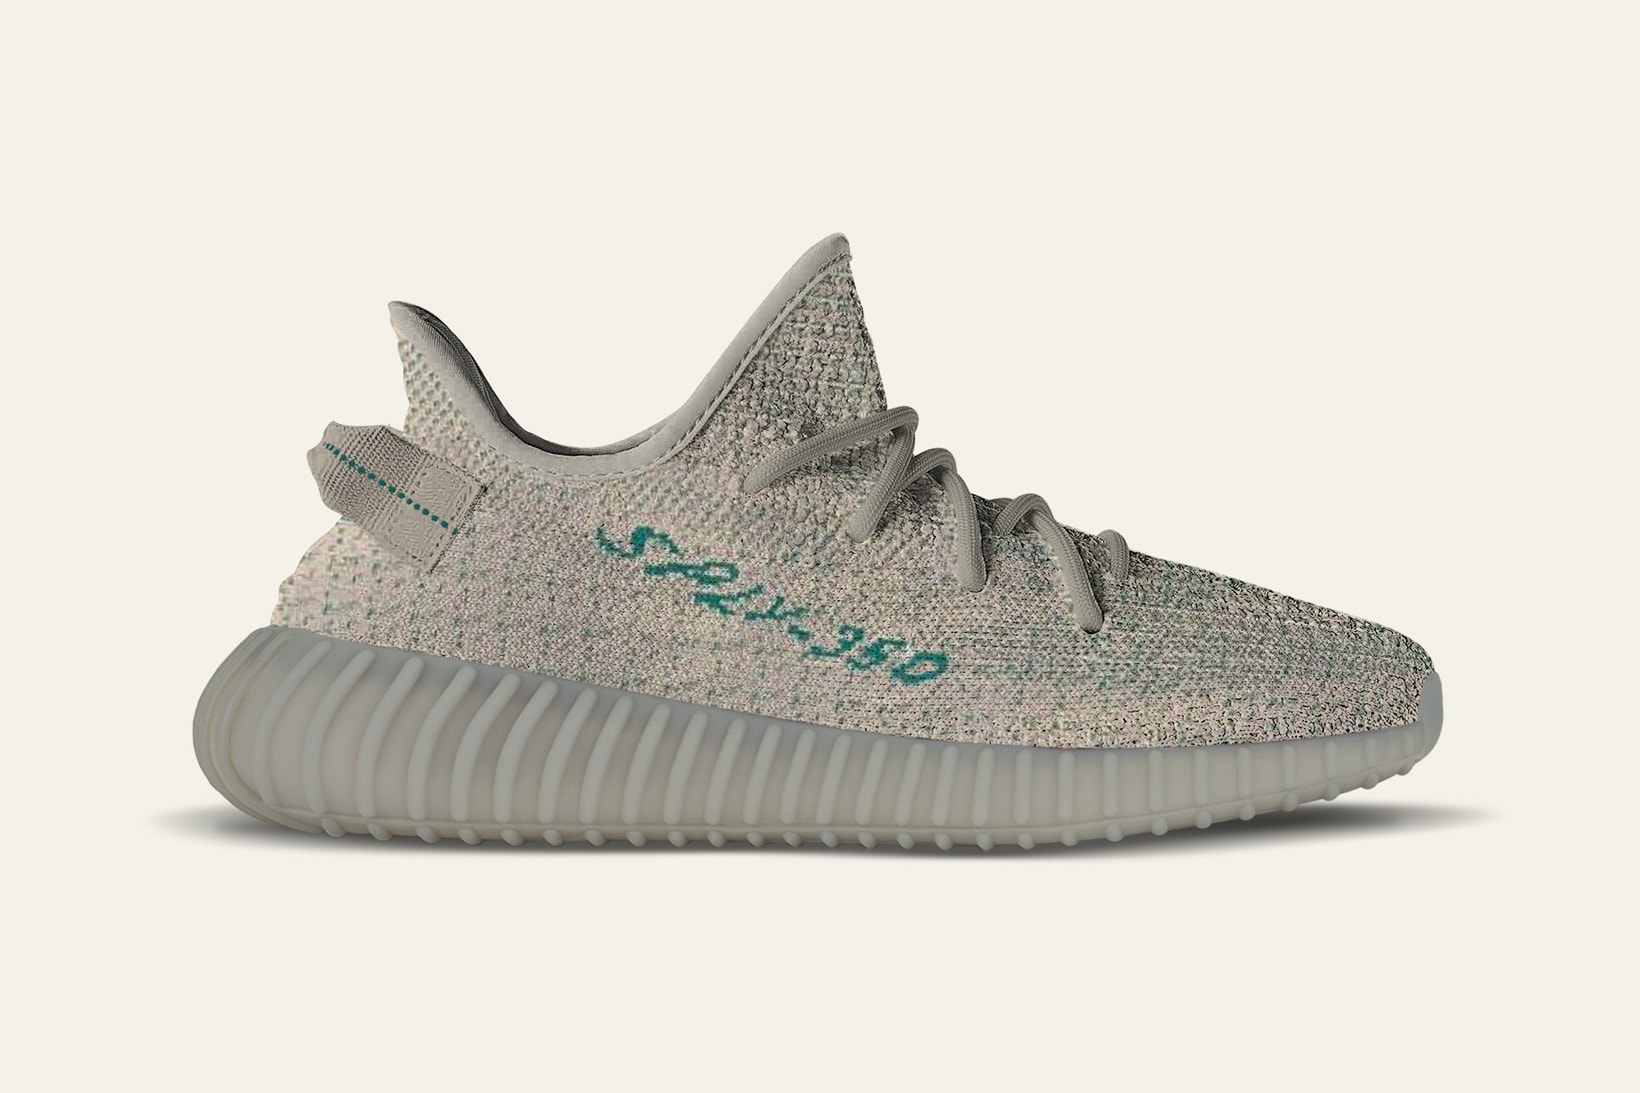 adidas Originals YEEZY BOOST 350 V2 Moonrock Green 2018 New Pattern Kanye West Sneakers Shoes Footwear